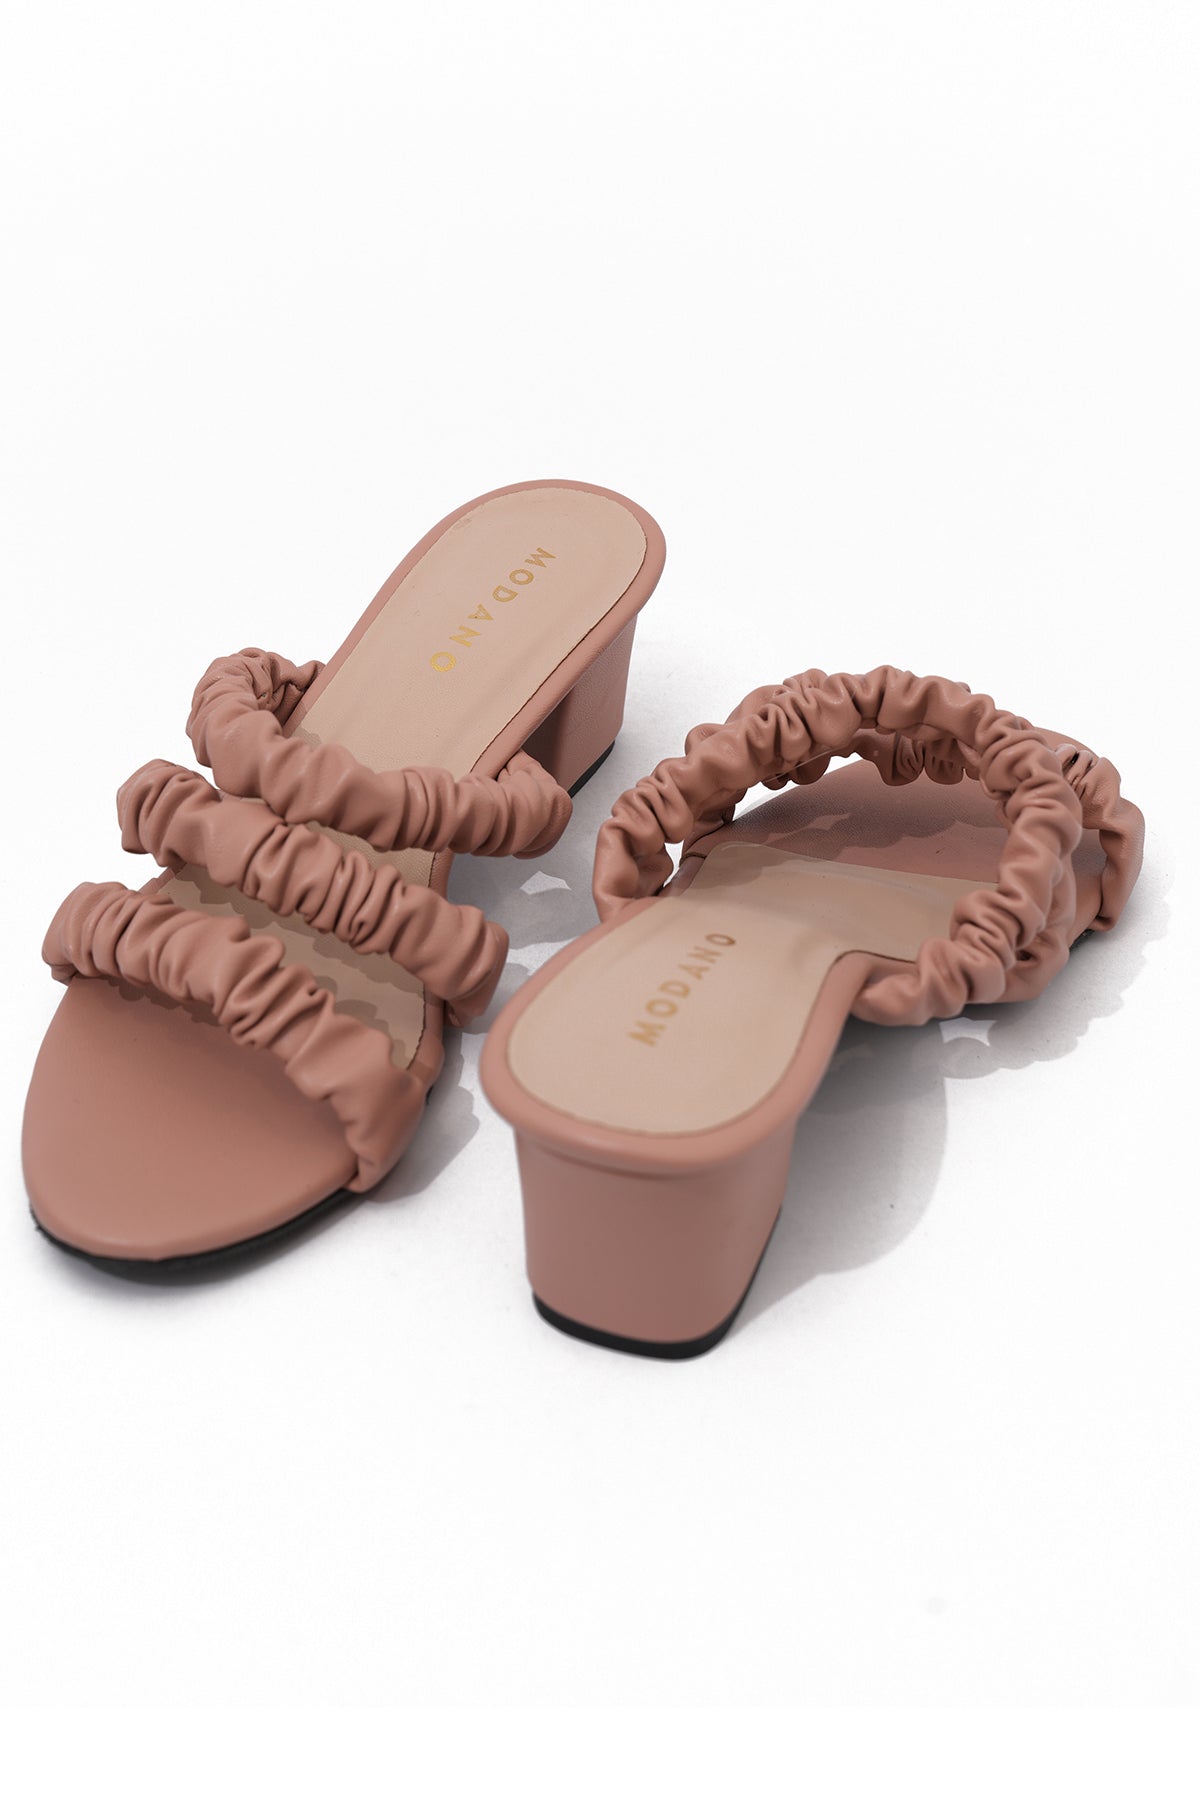 Modano Women's Casual Shoe